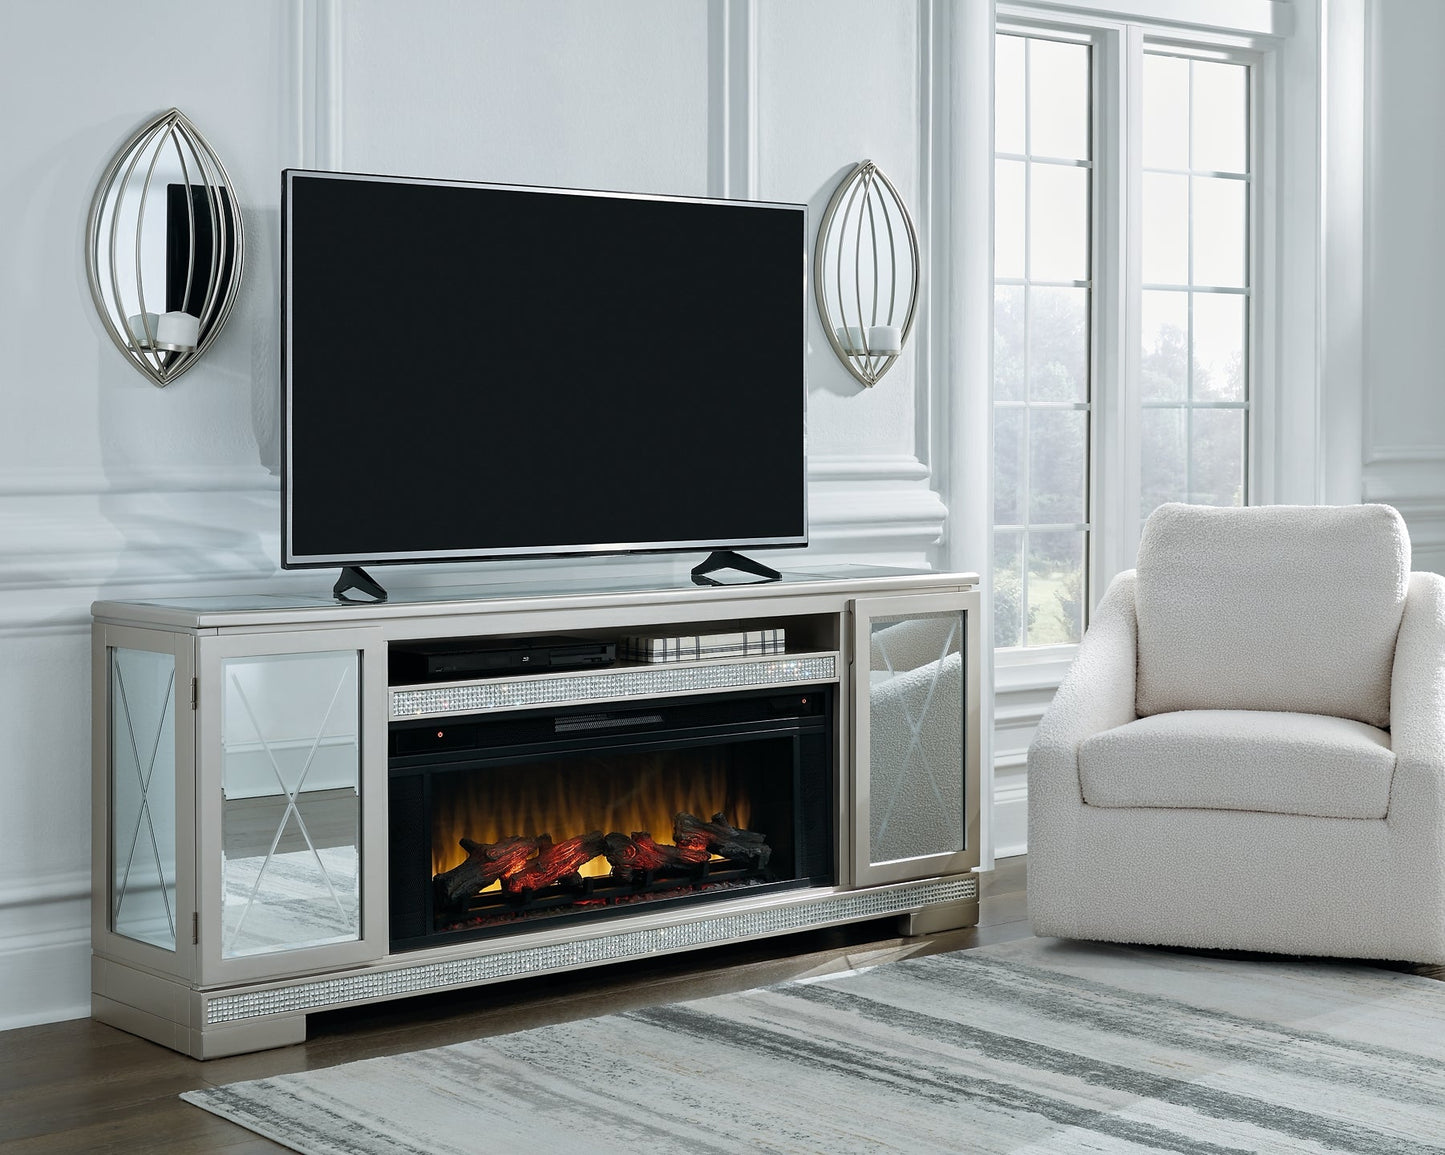 Flamory LG TV Stand w/Fireplace Option Smyrna Furniture Outlet